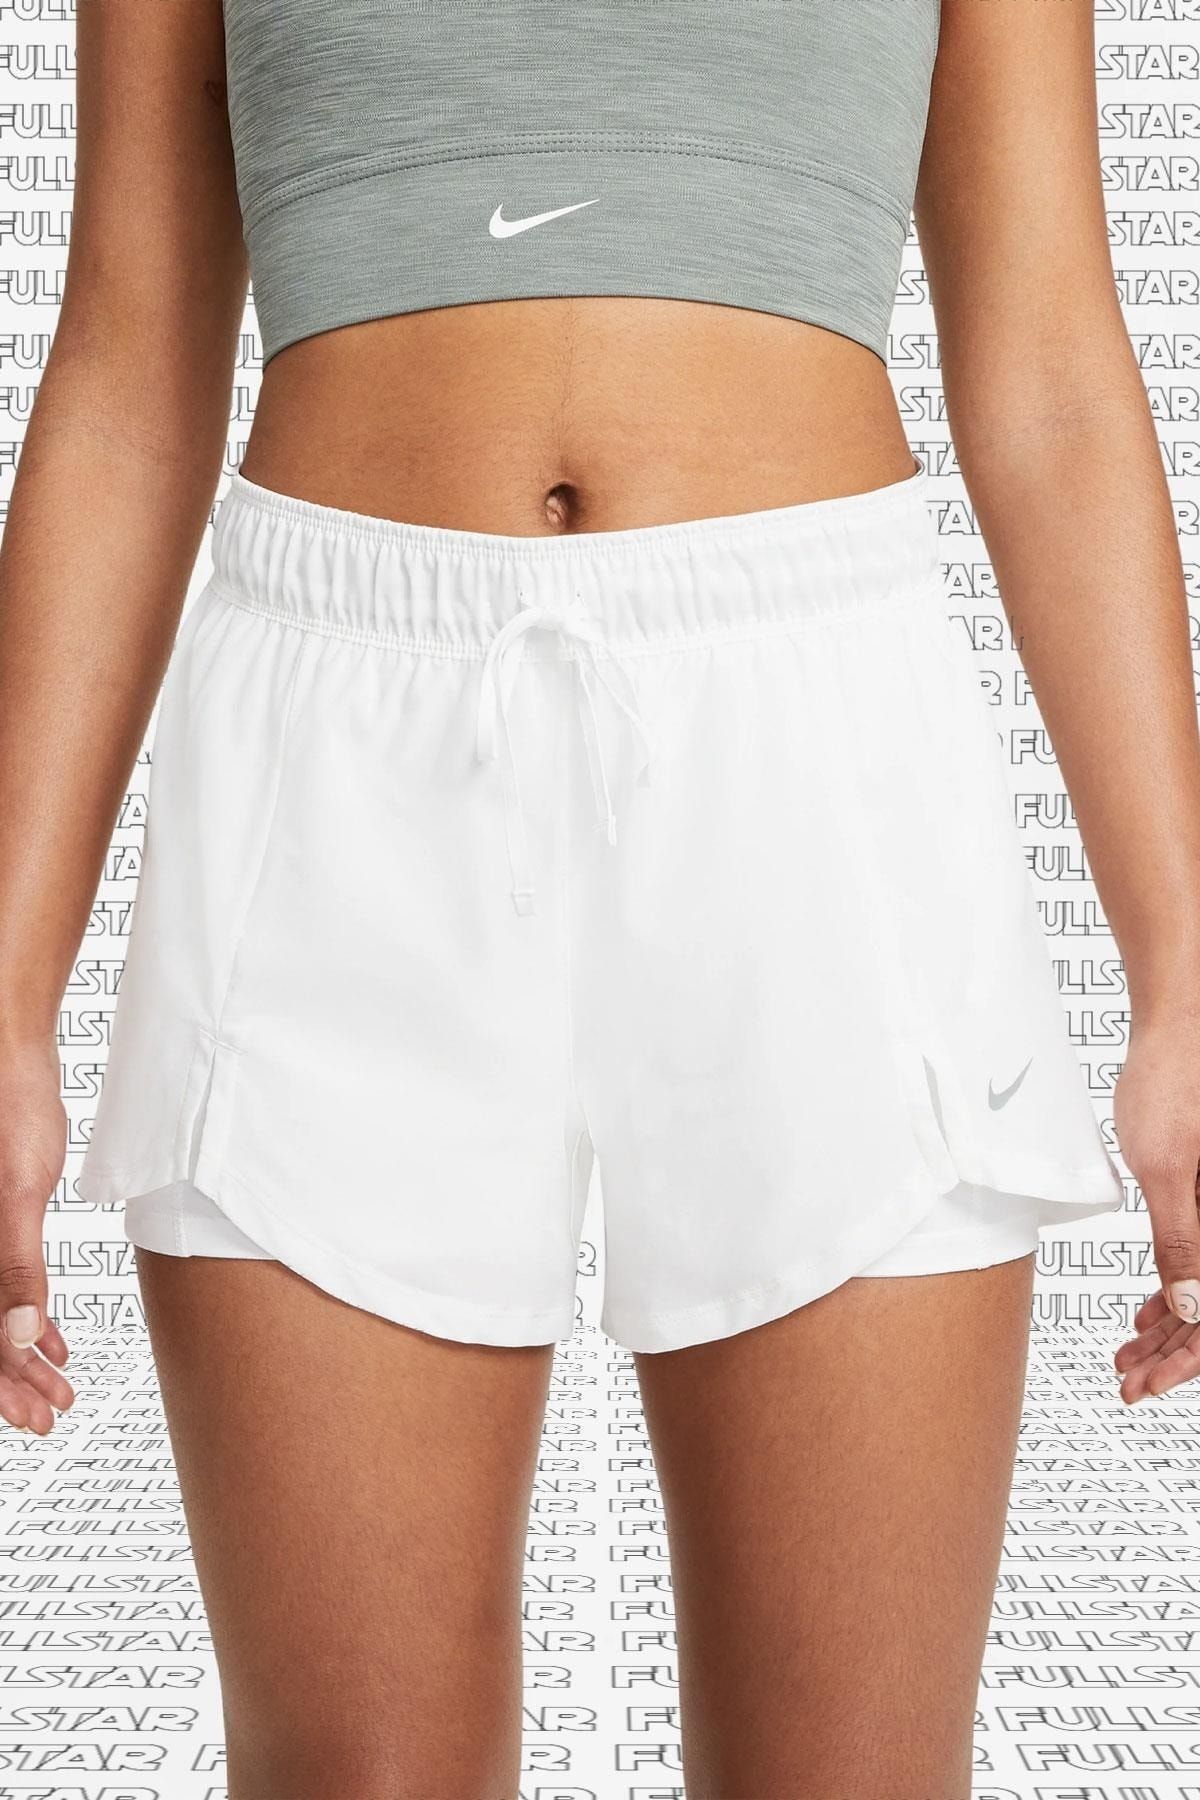 Nike Flex Essential 2 in 1 Training White Shorts ikisi Bir Arada Taytlı Beyaz Kadın Şort